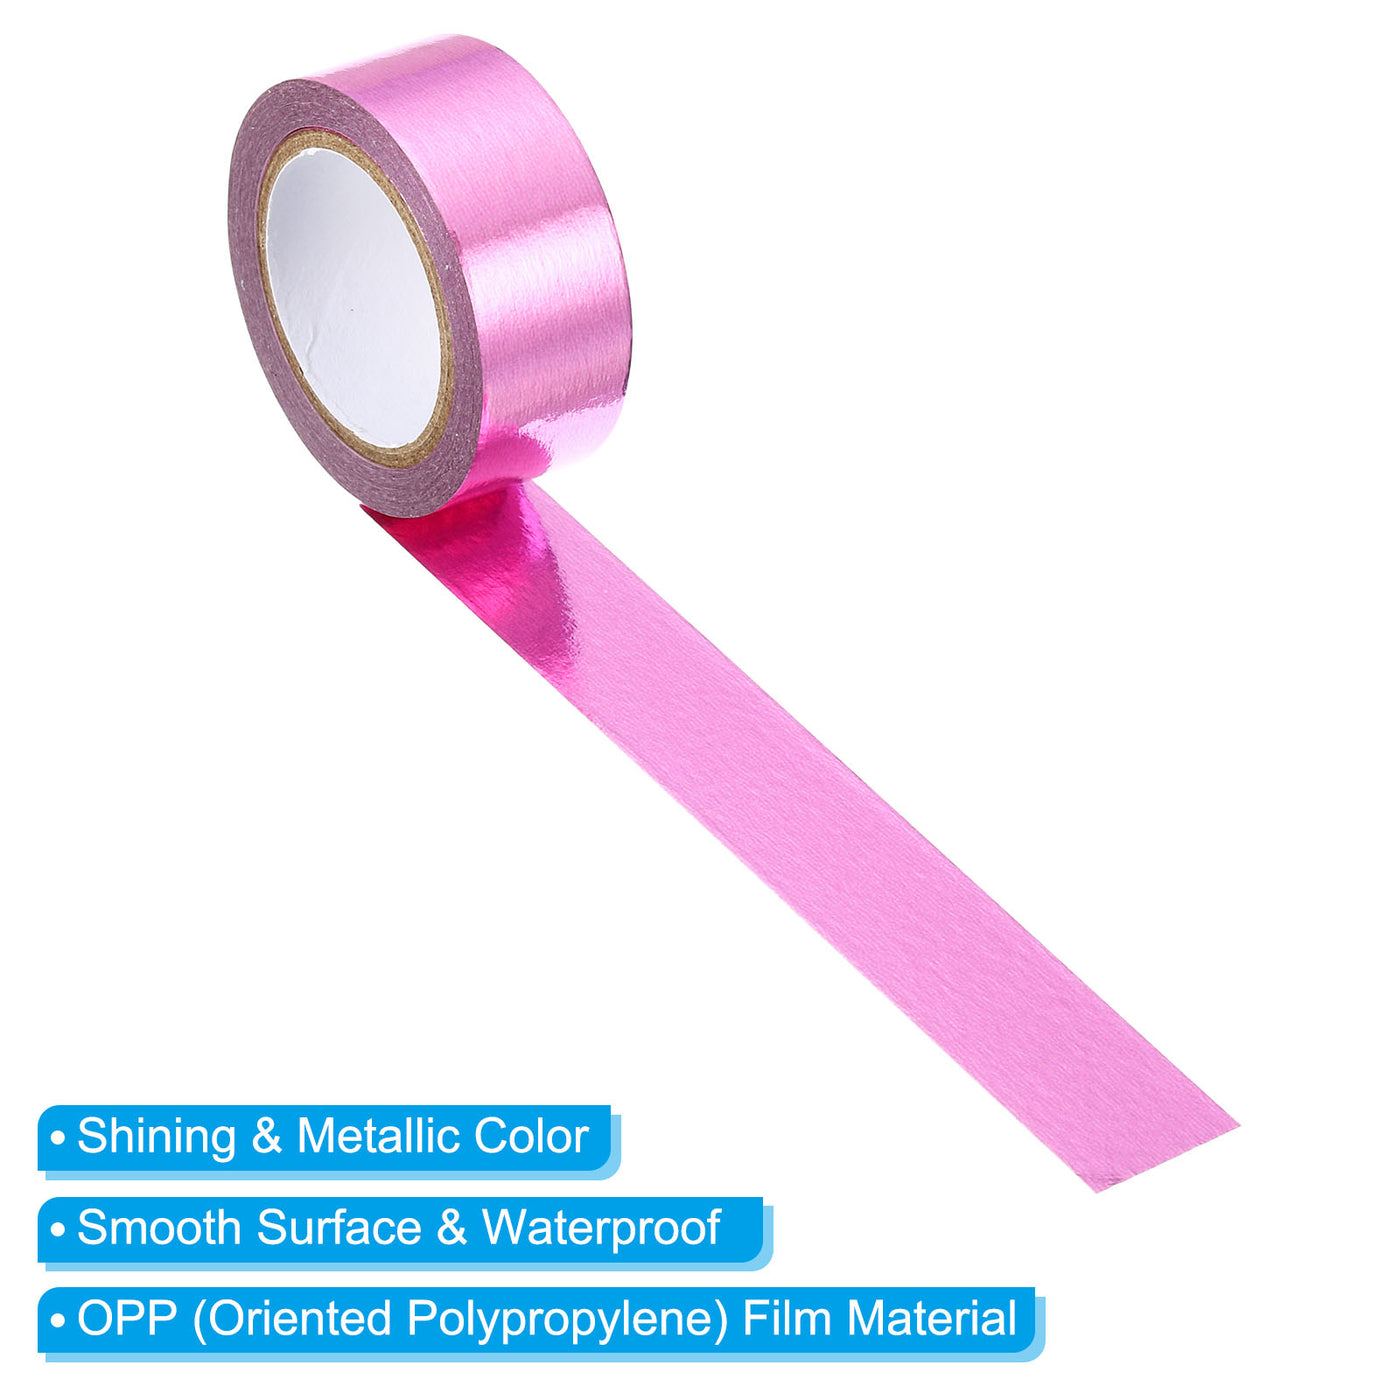 Harfington Metallic Washi Tape 15mm x 5m, 10 Pack Art Paper Tapes Washi Self-Adhesive Pink